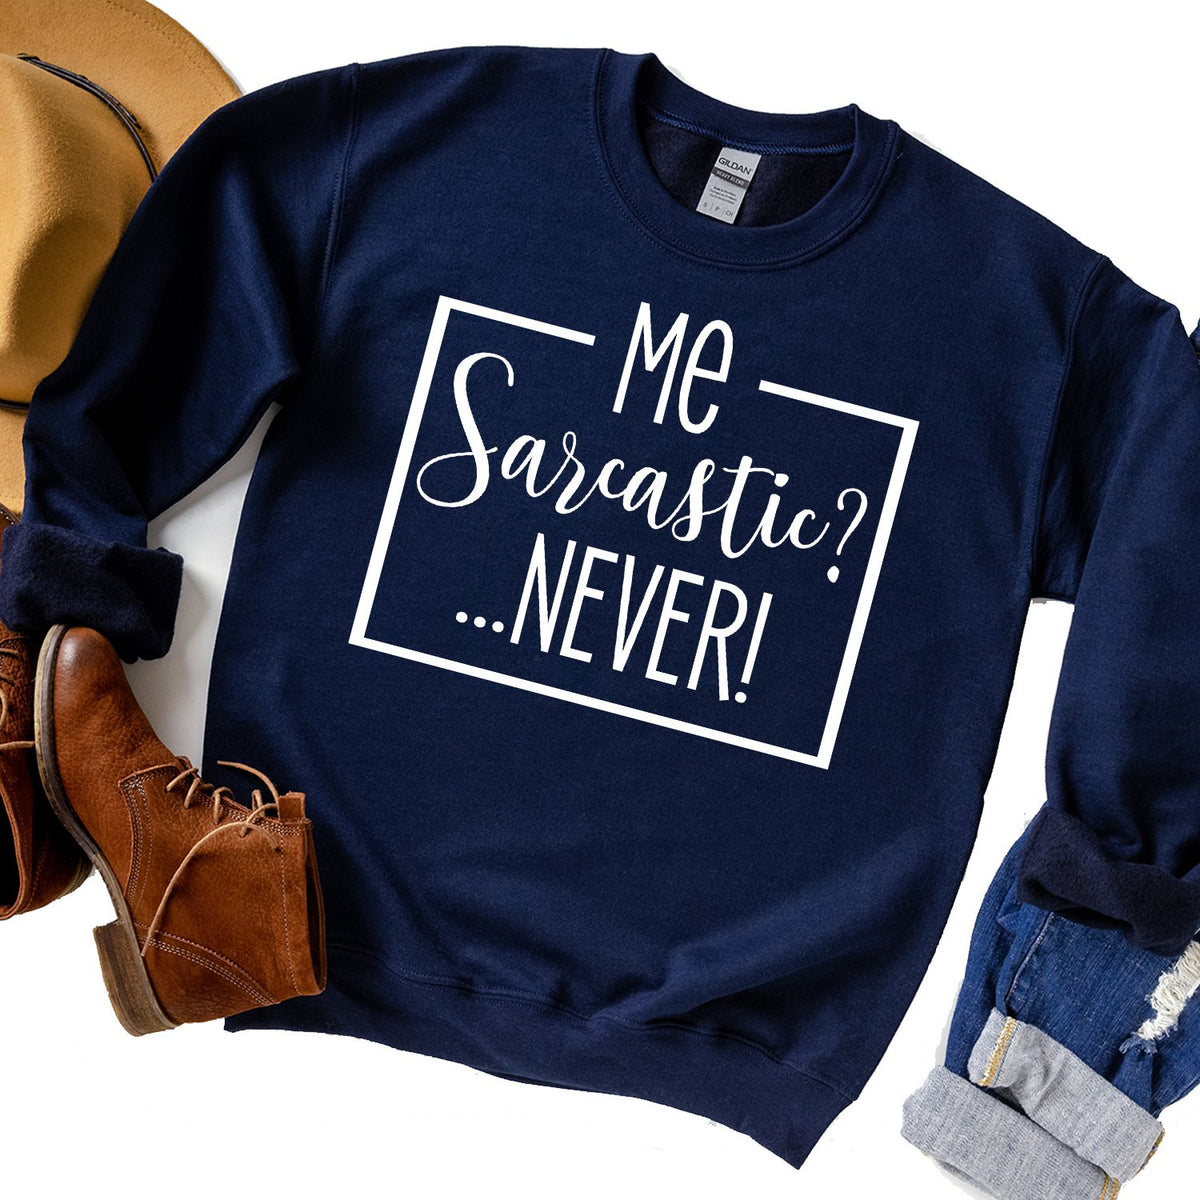 Me Sarcastic?... Never! - Long Sleeve Heavy Crewneck Sweatshirt